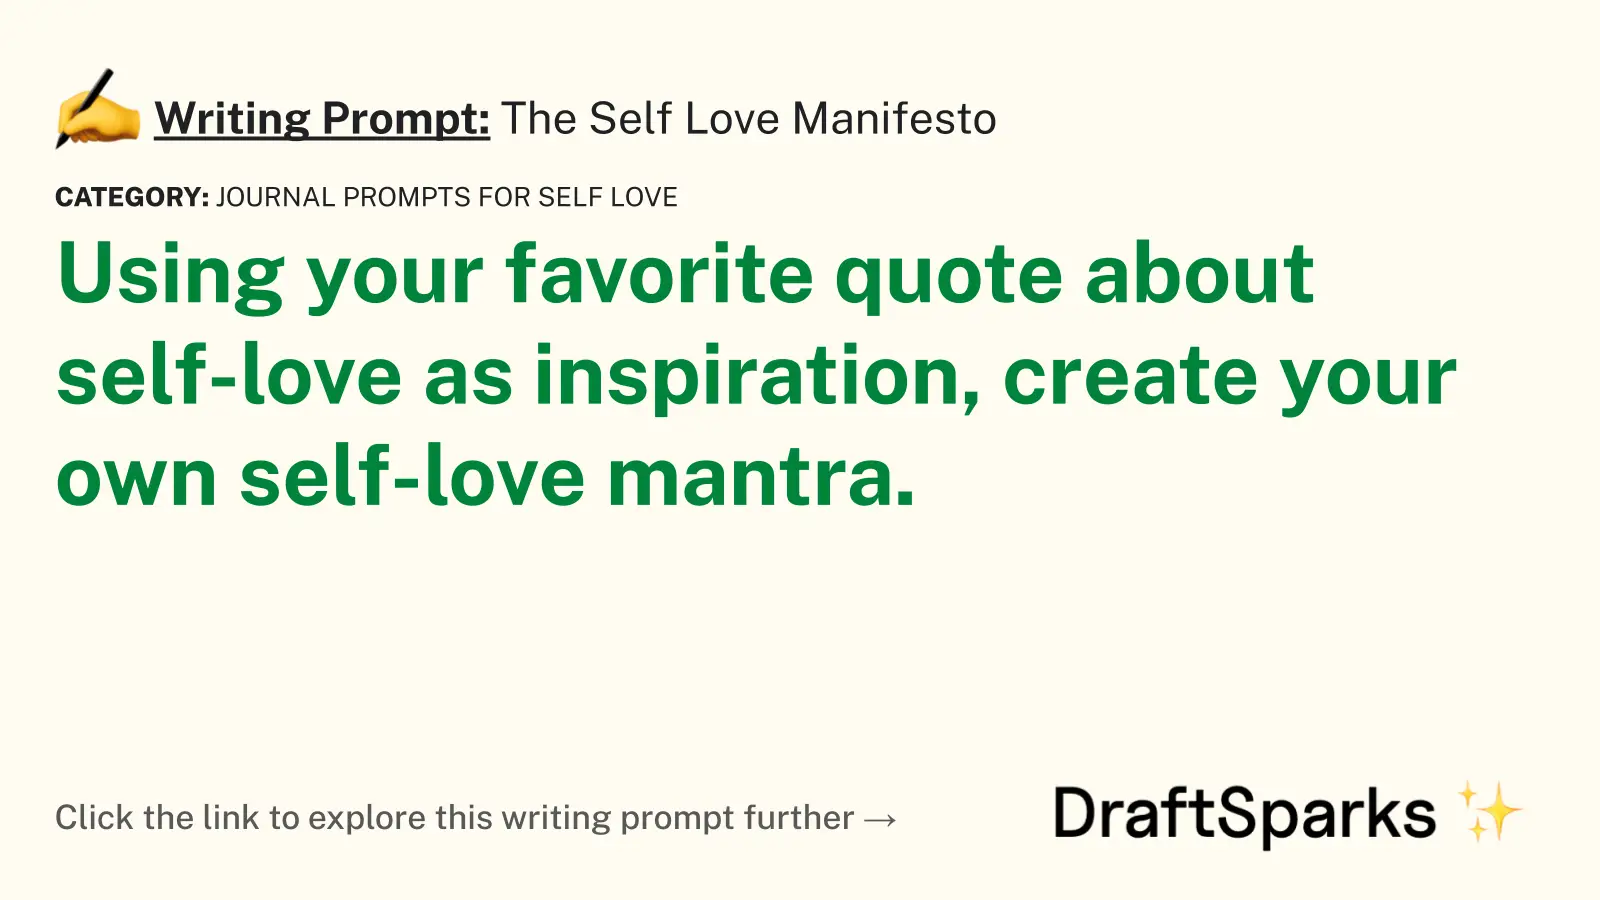 The Self Love Manifesto